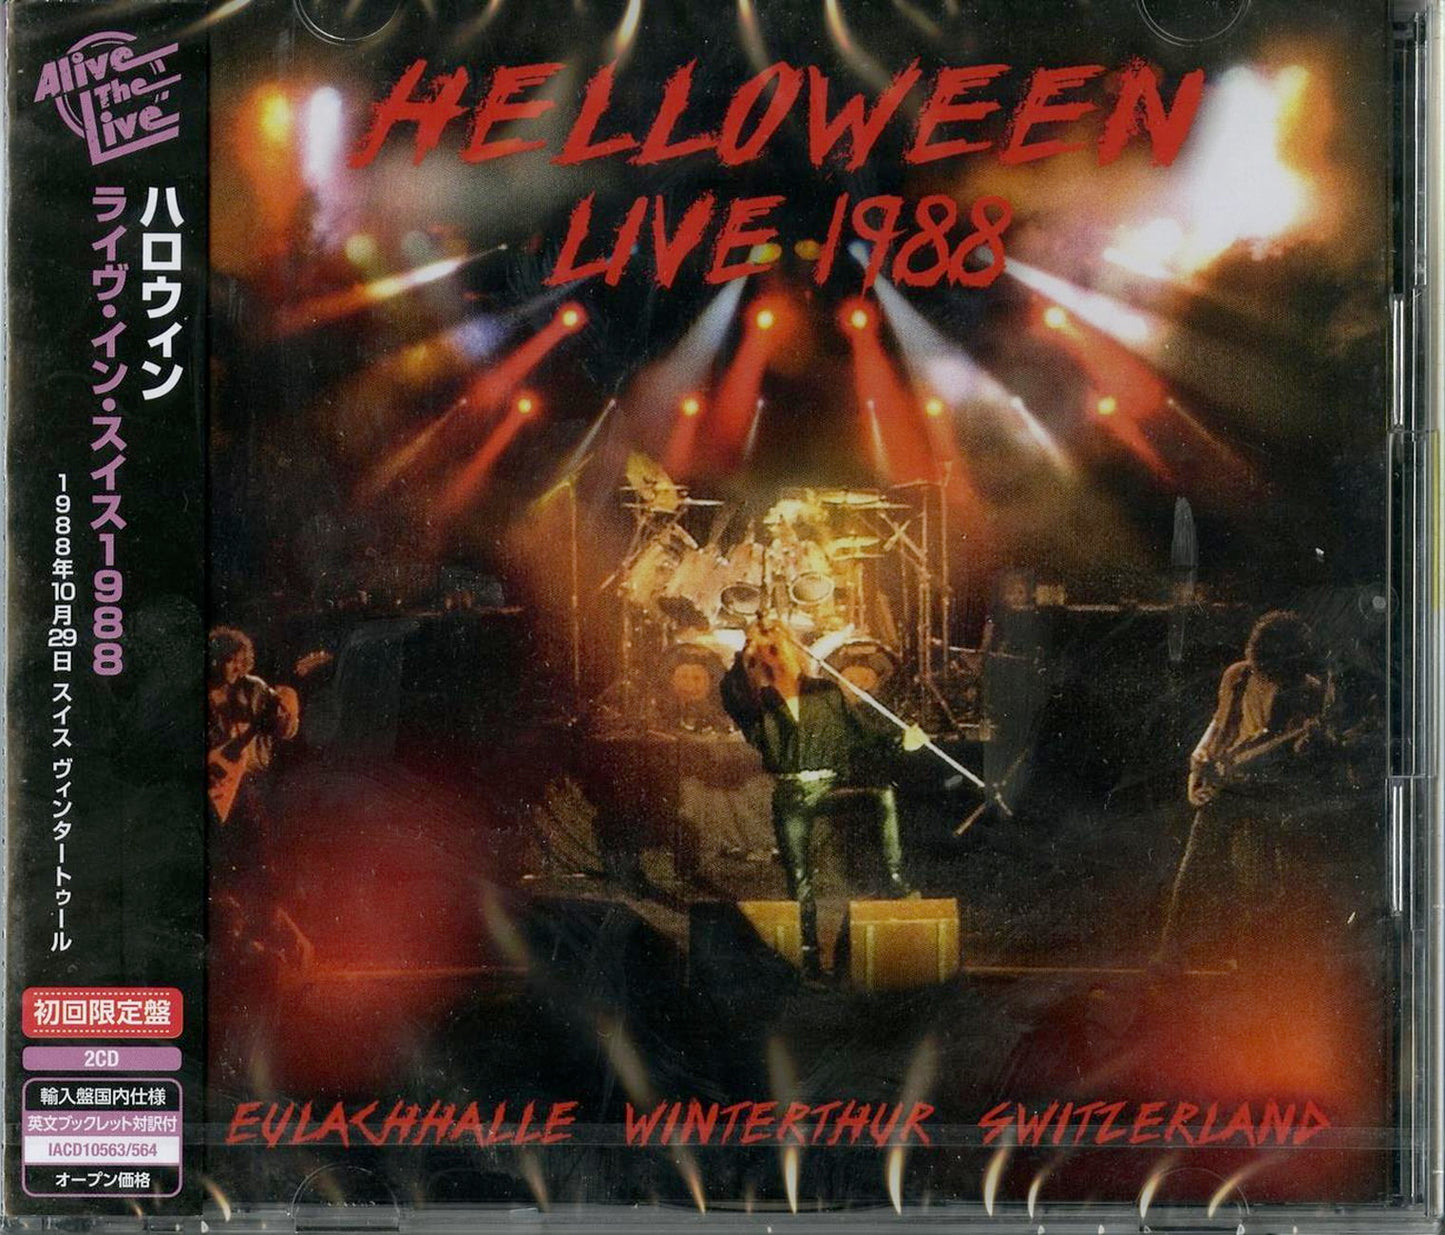 Helloween - Live 1988 - Import 2 CD